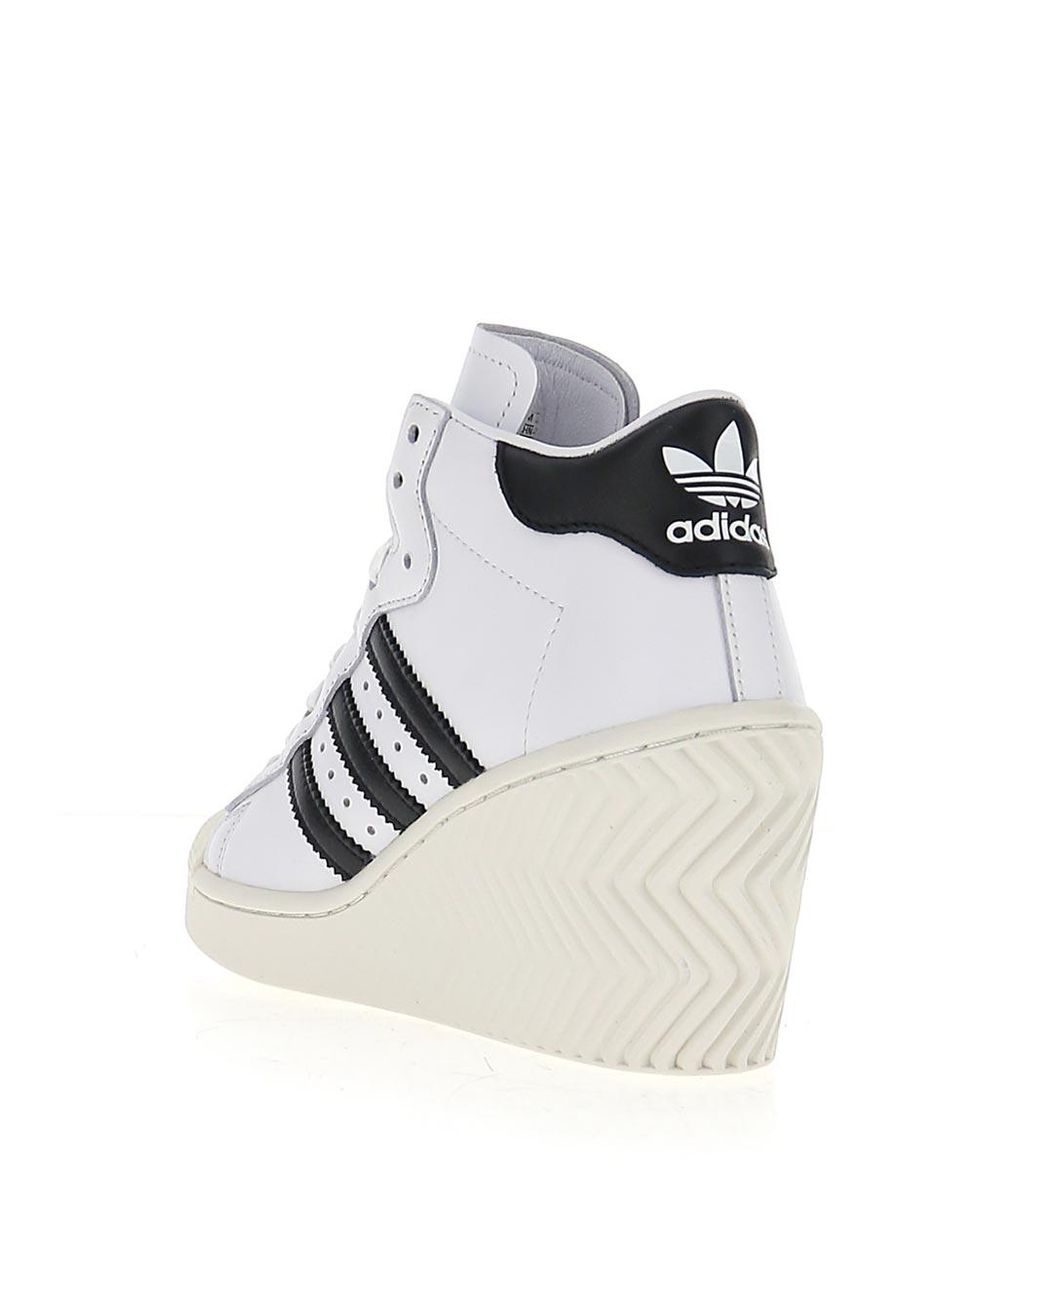 adidas Originals Superstar Ellure Wedged Sneakers in White | Lyst